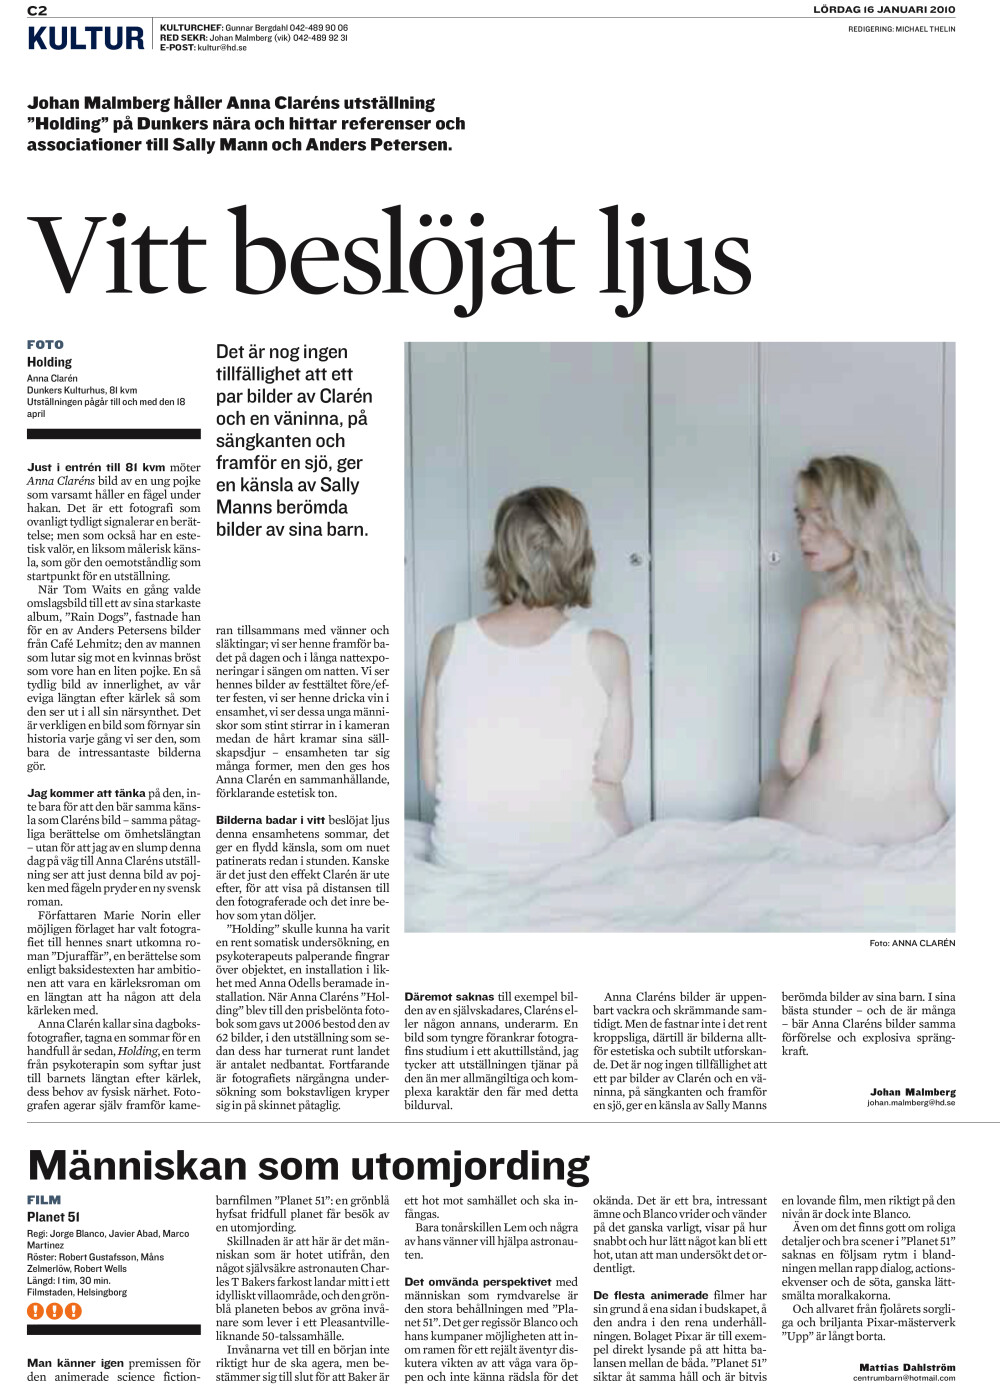 Helsingborgs Dagblad, 2010-01-16